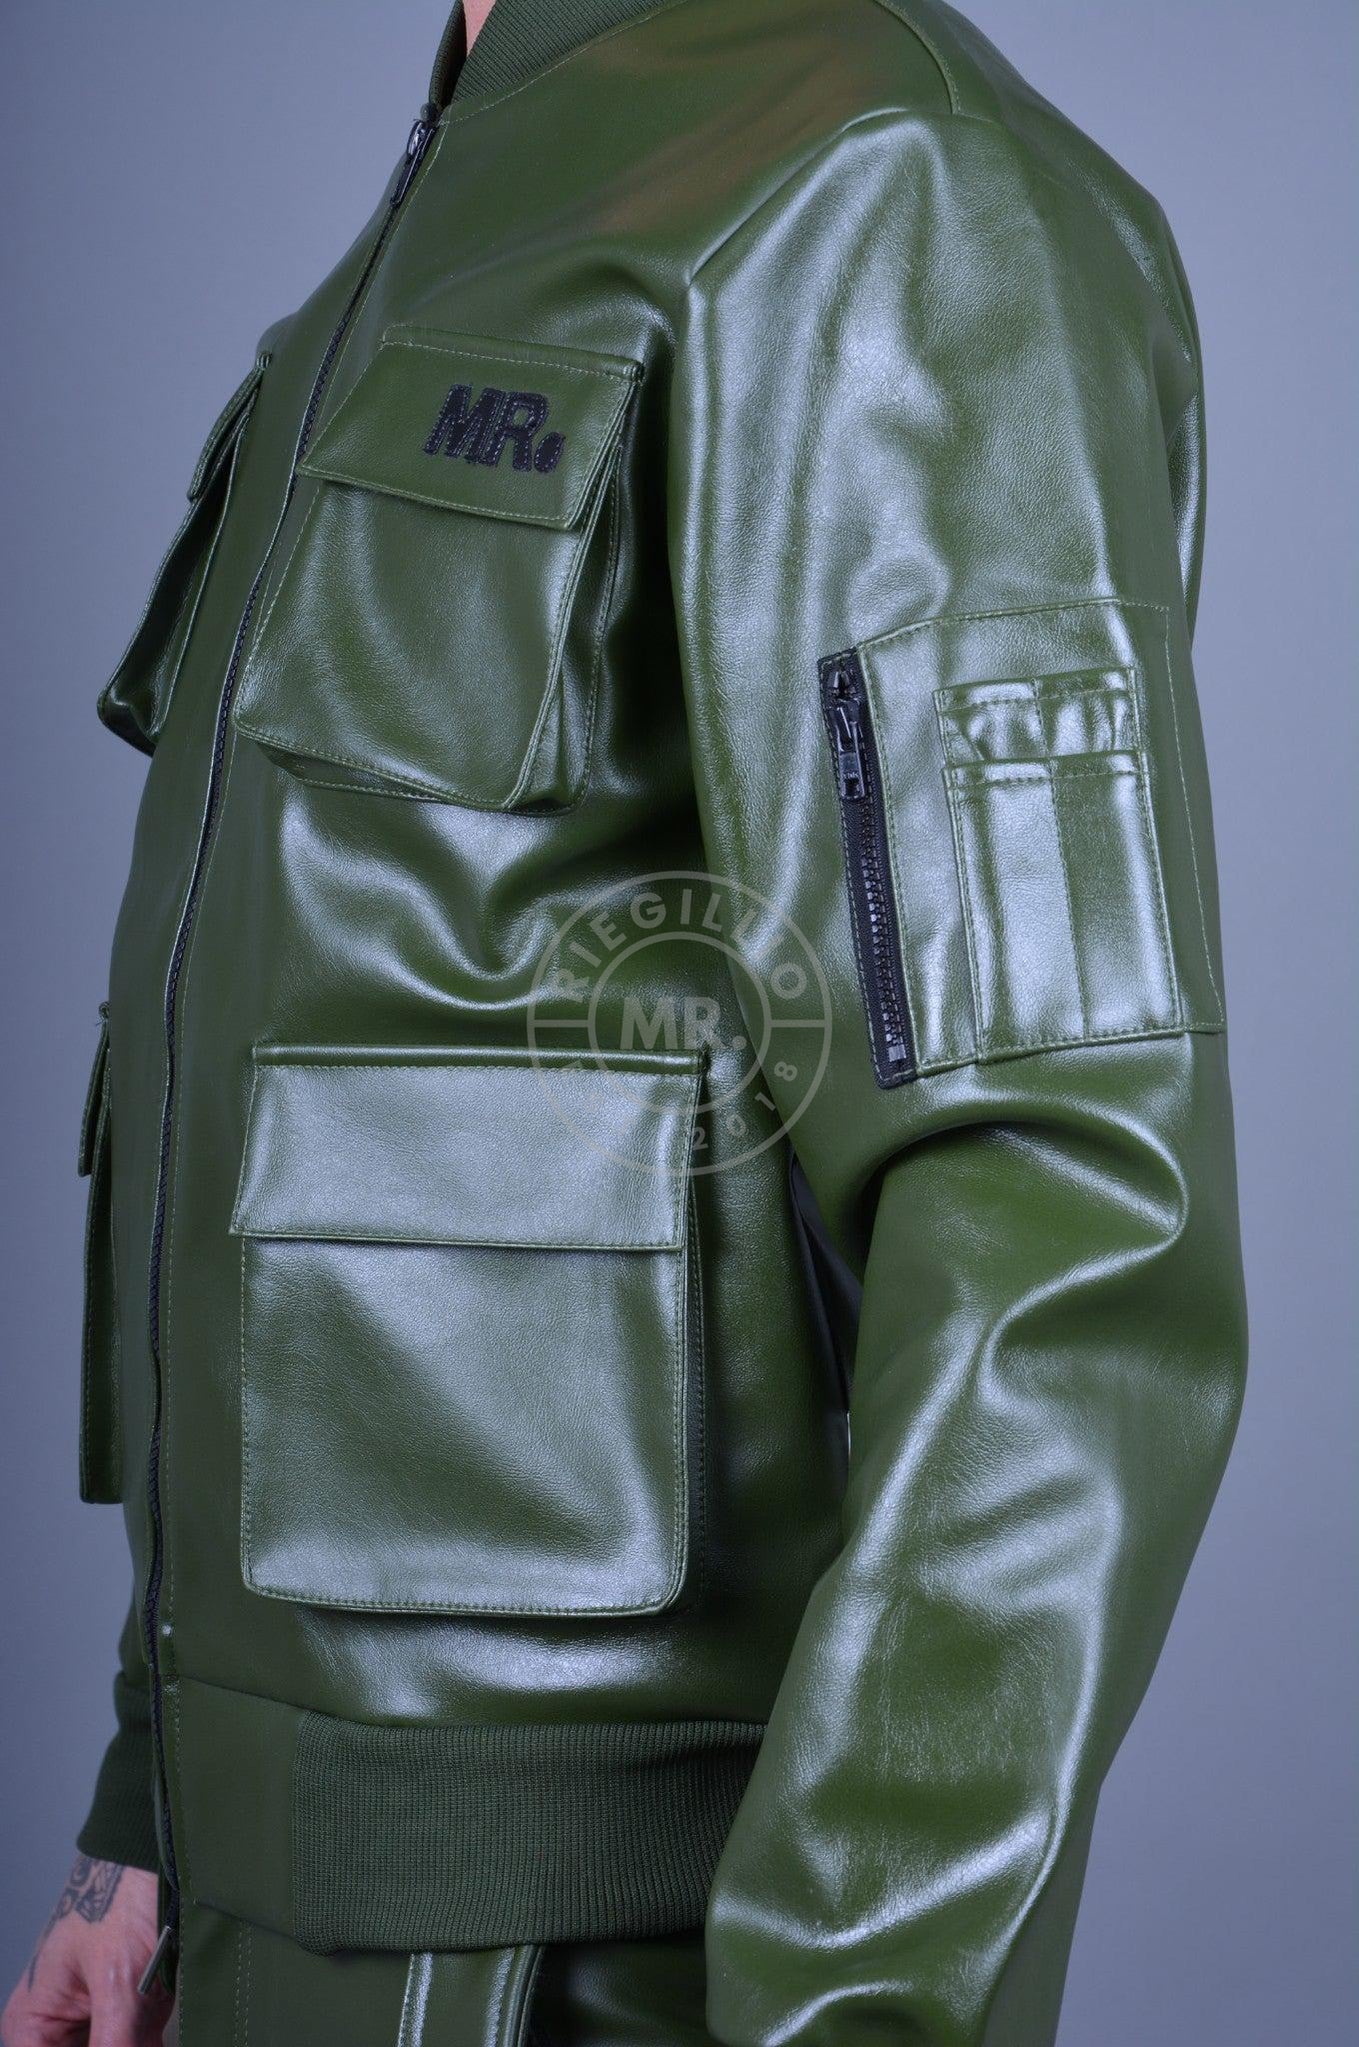 MR. Utility Jacket - Green-at MR. Riegillio